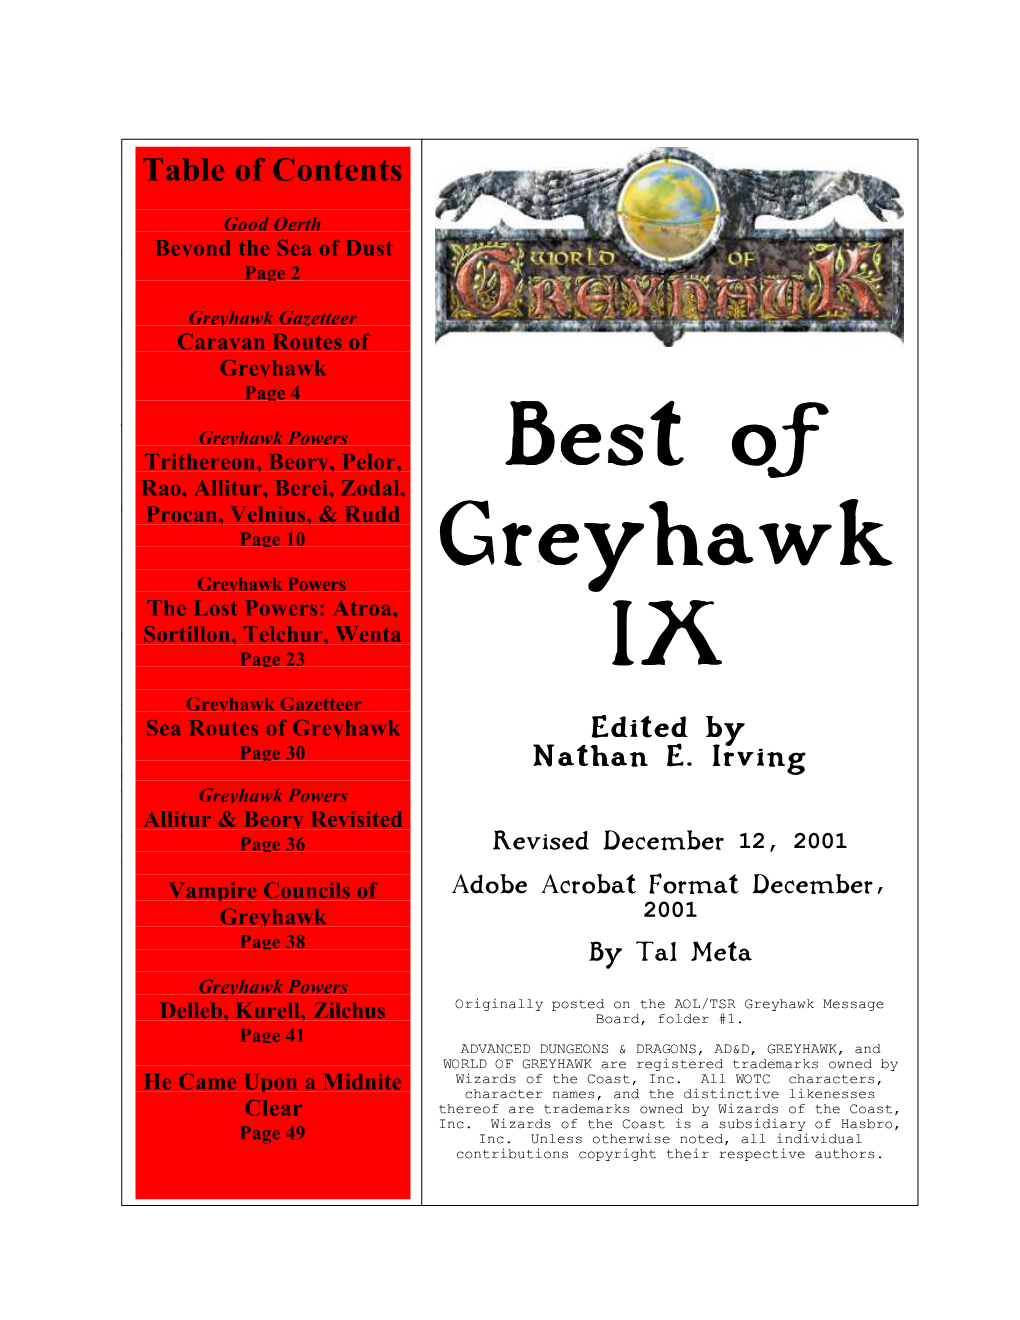 Best of Greyhawk IX